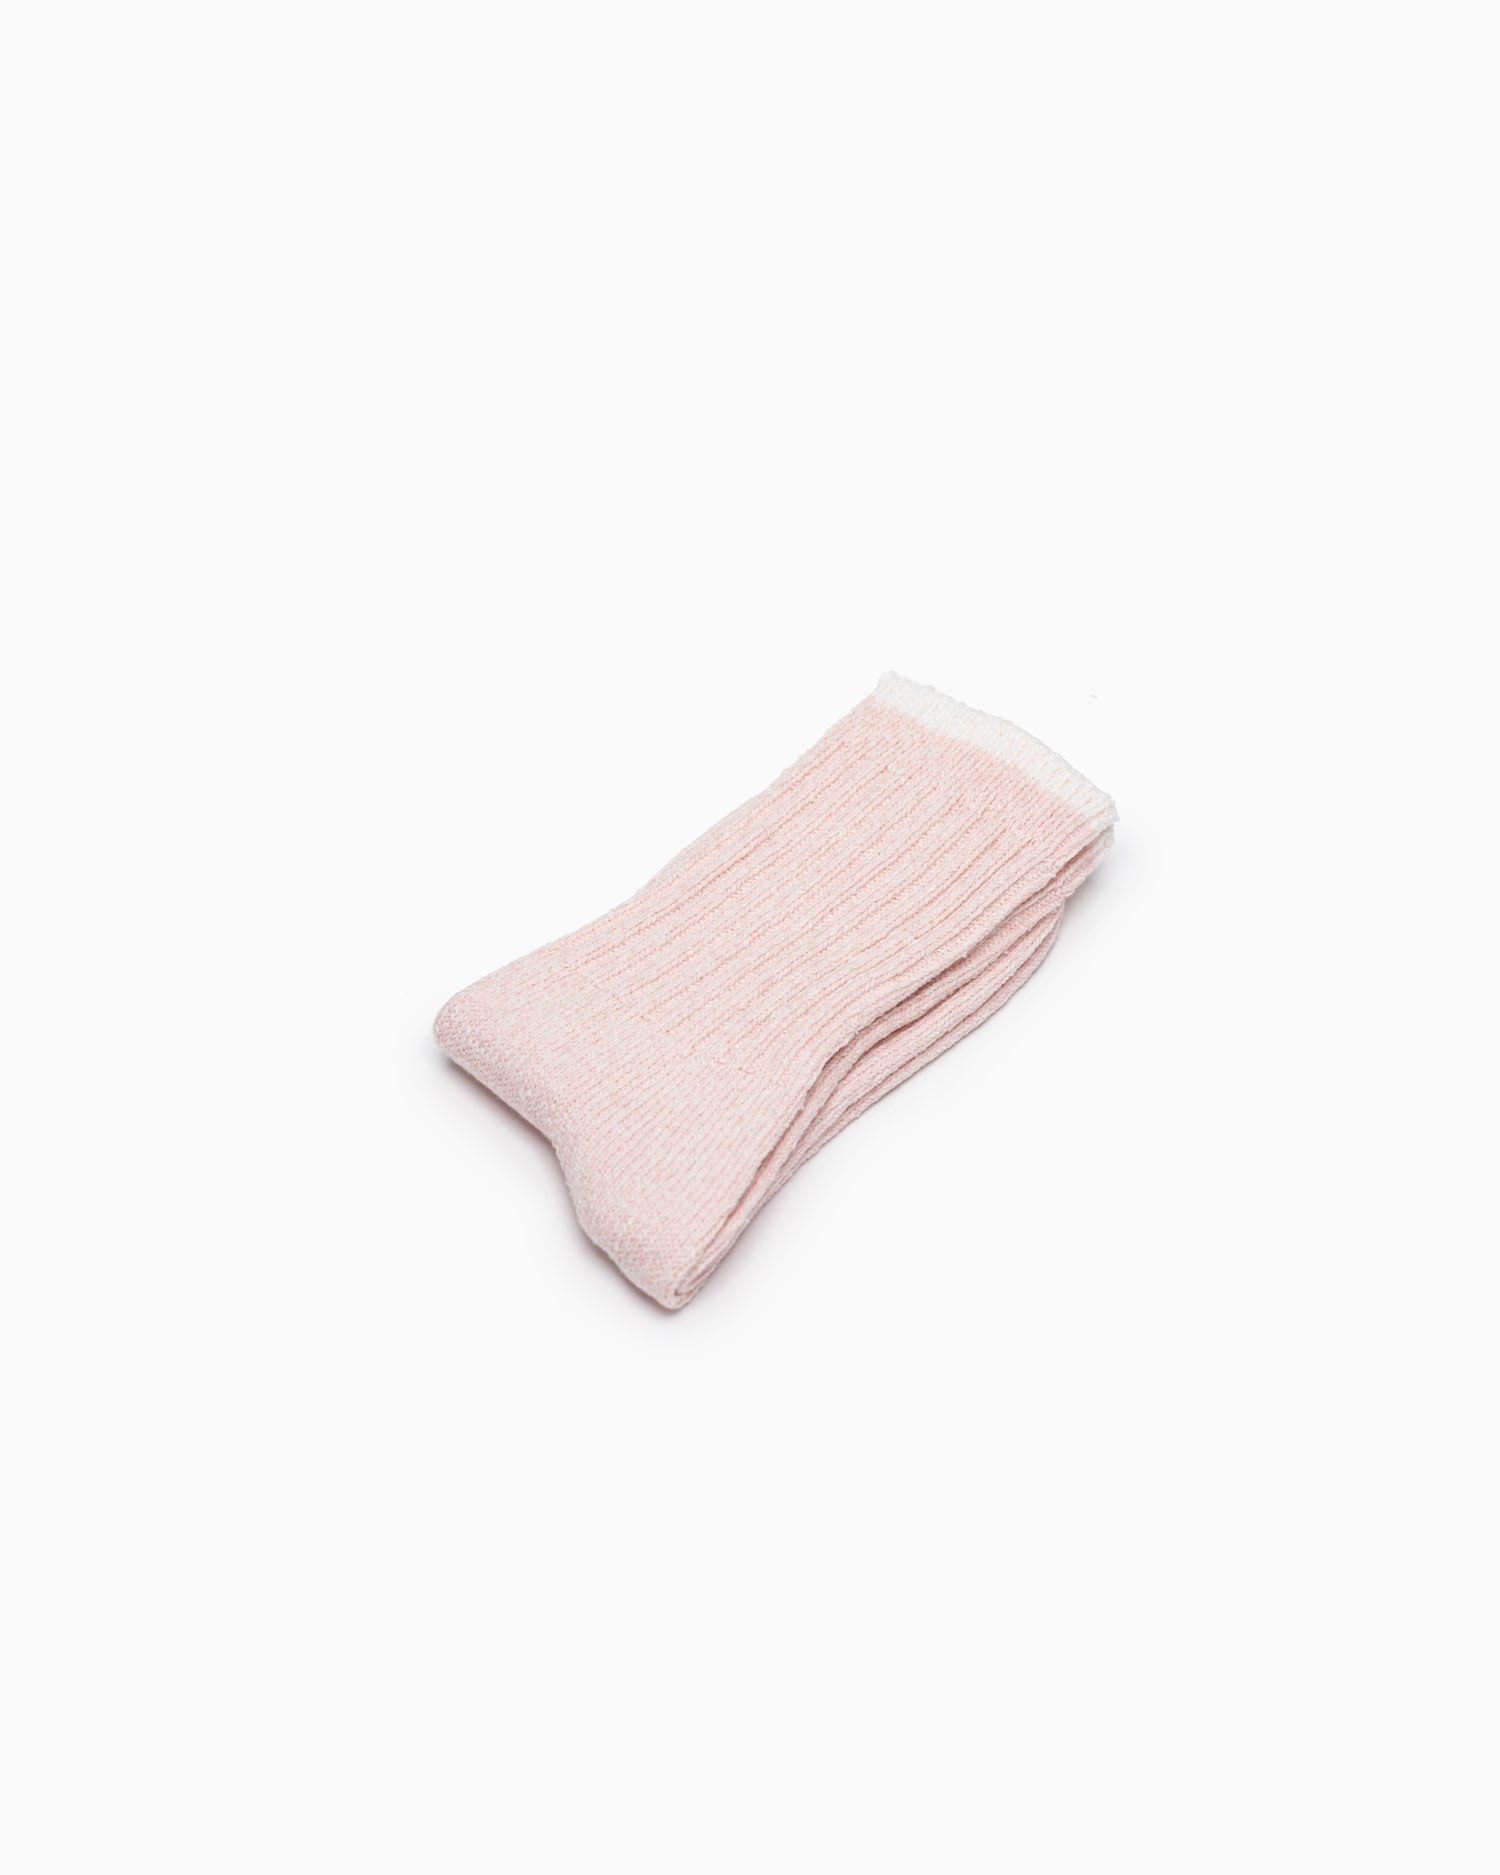 Silk Cotton Socks - Building Pink